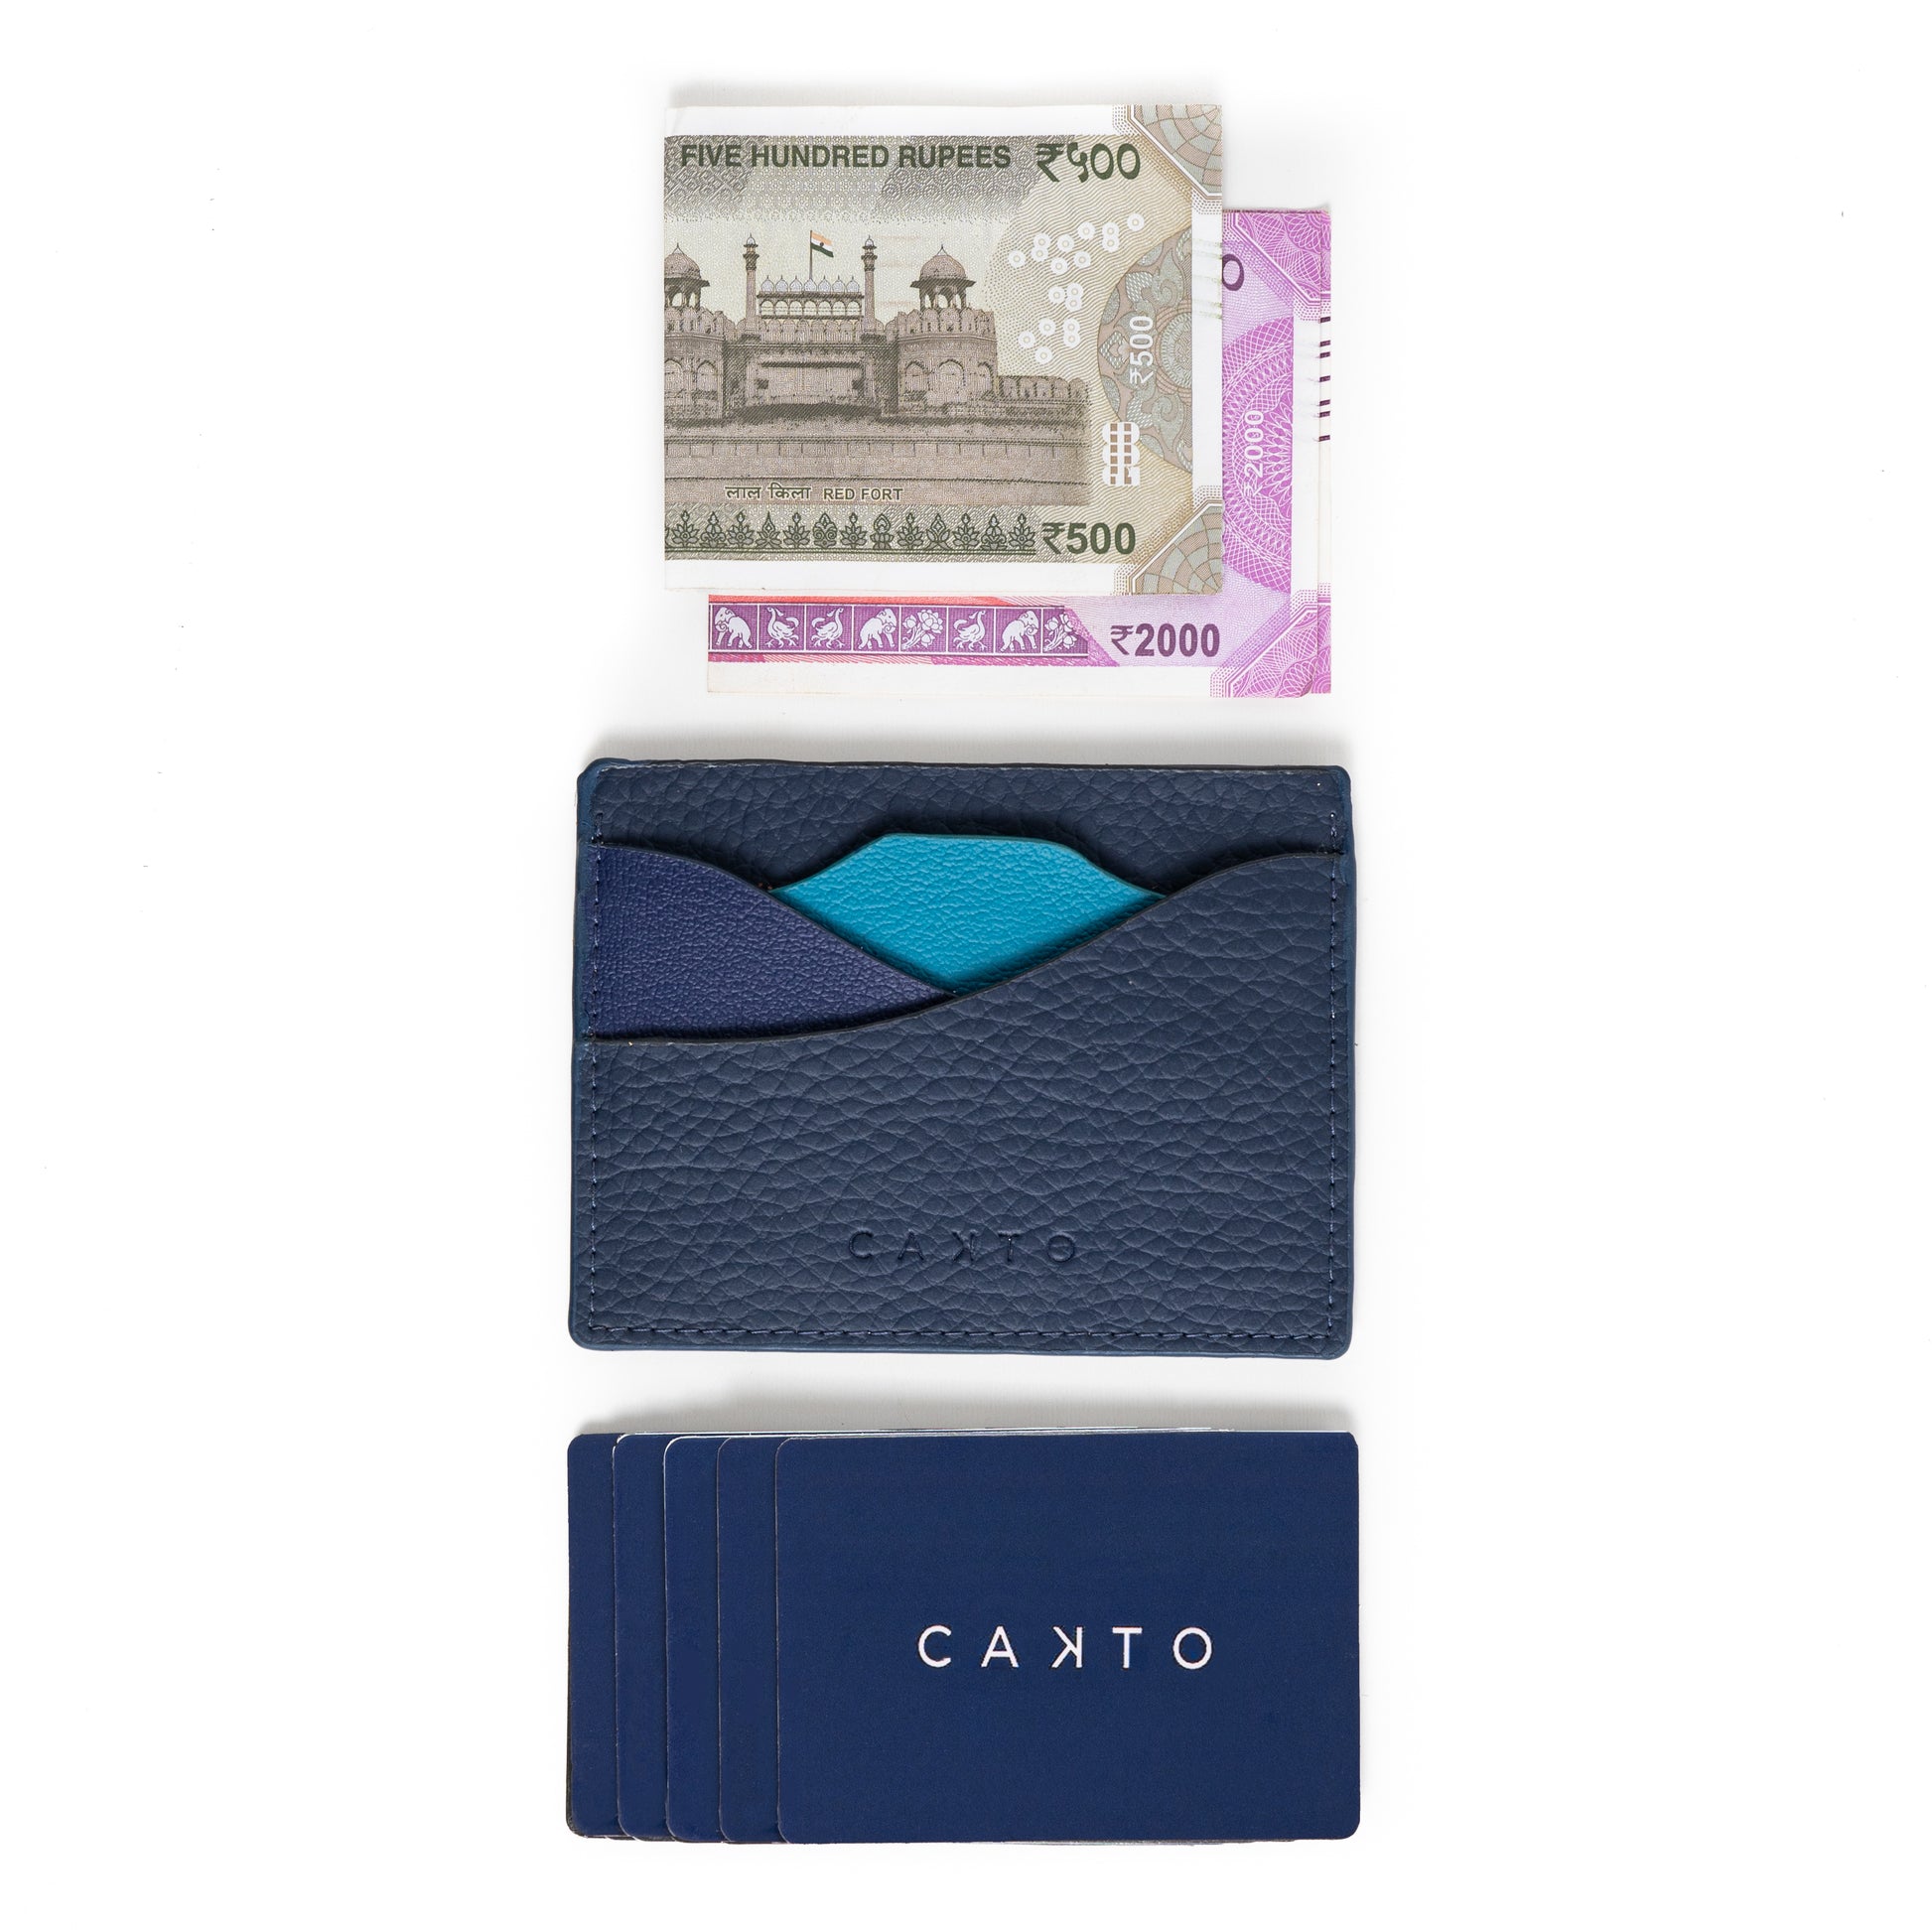 KRUK Ocean Blue Leather Card Holder – K R U K